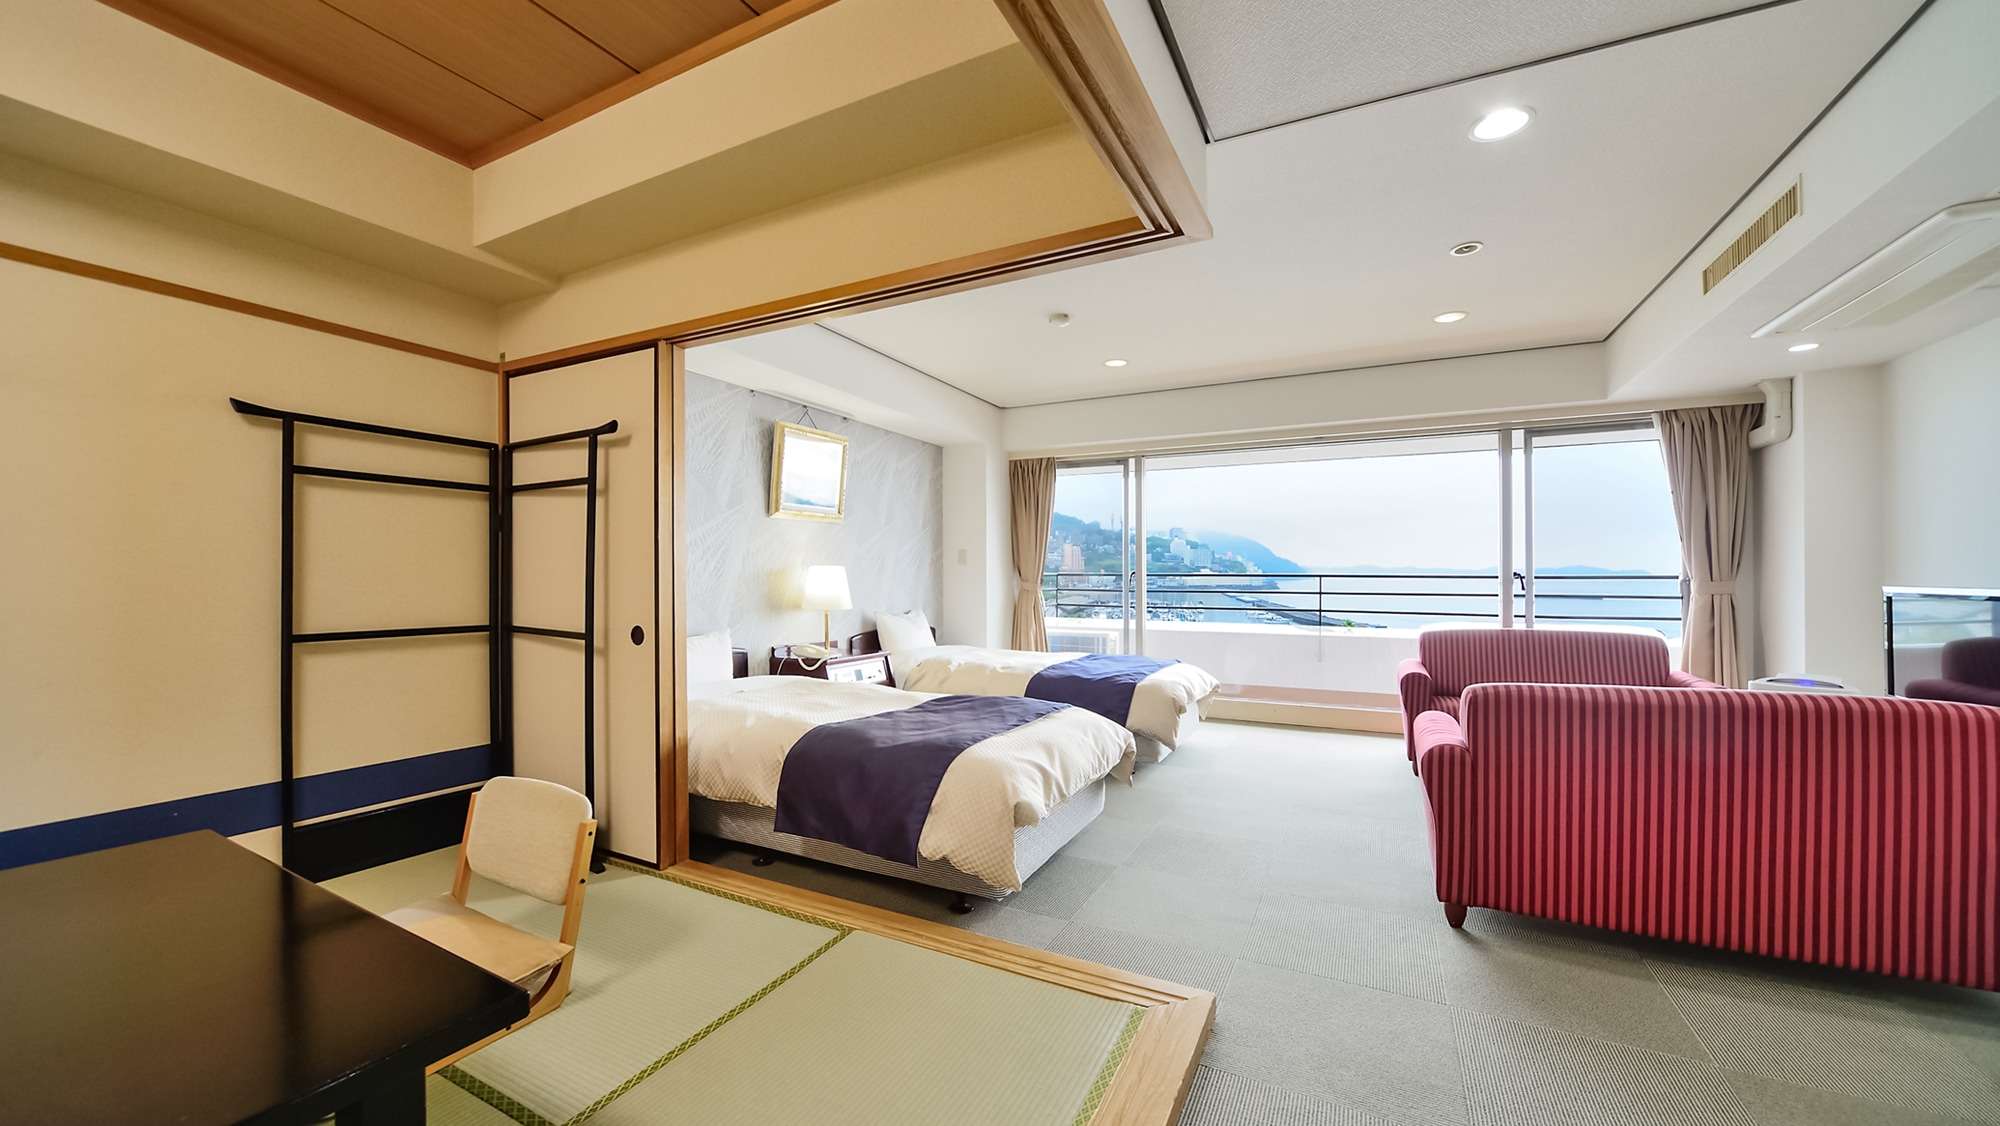 Overlooking Atami Bay! Rooms boasting ocean views